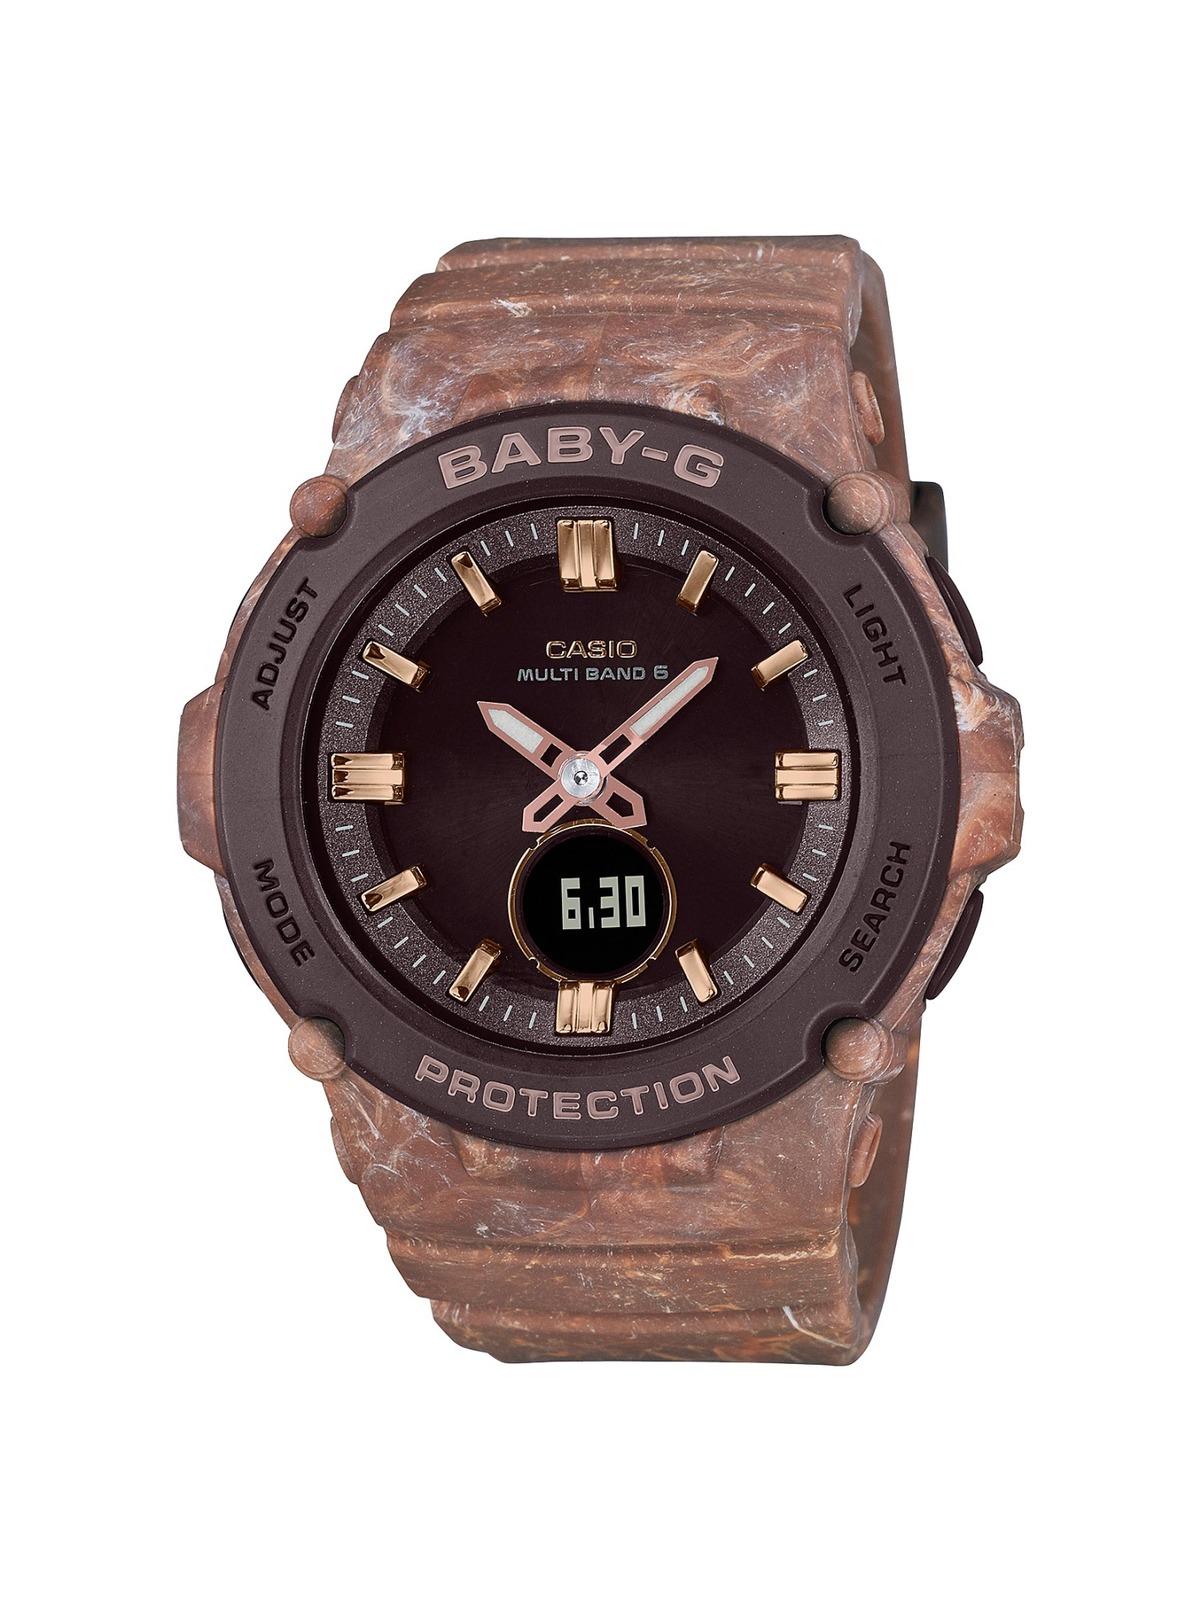 BABY-G“アイスクリーム”着想の腕時計、質感までチョコミントのつぶつぶケース コピー